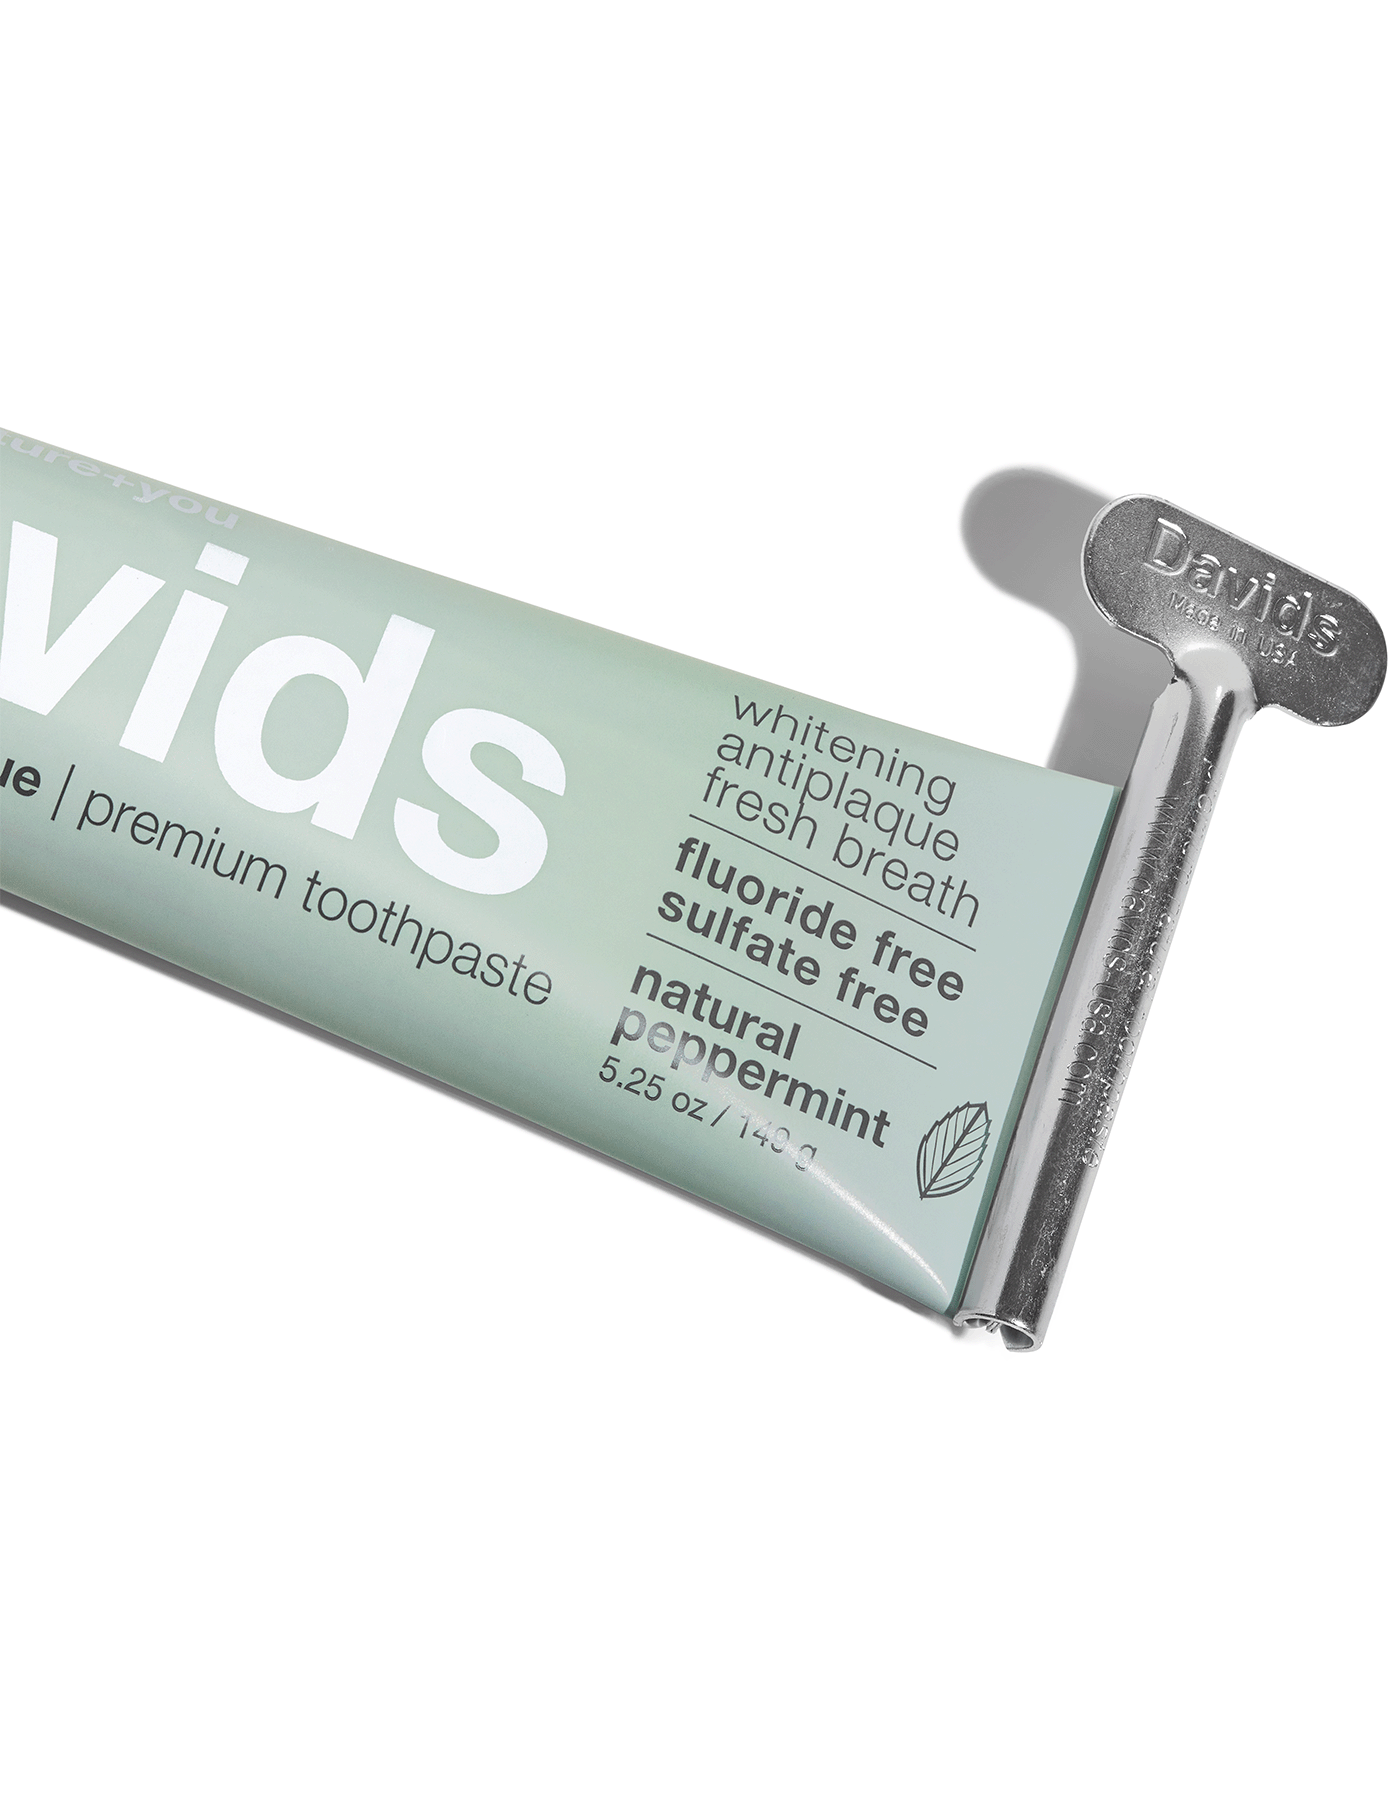 Davids premium toothpaste  /  peppermint